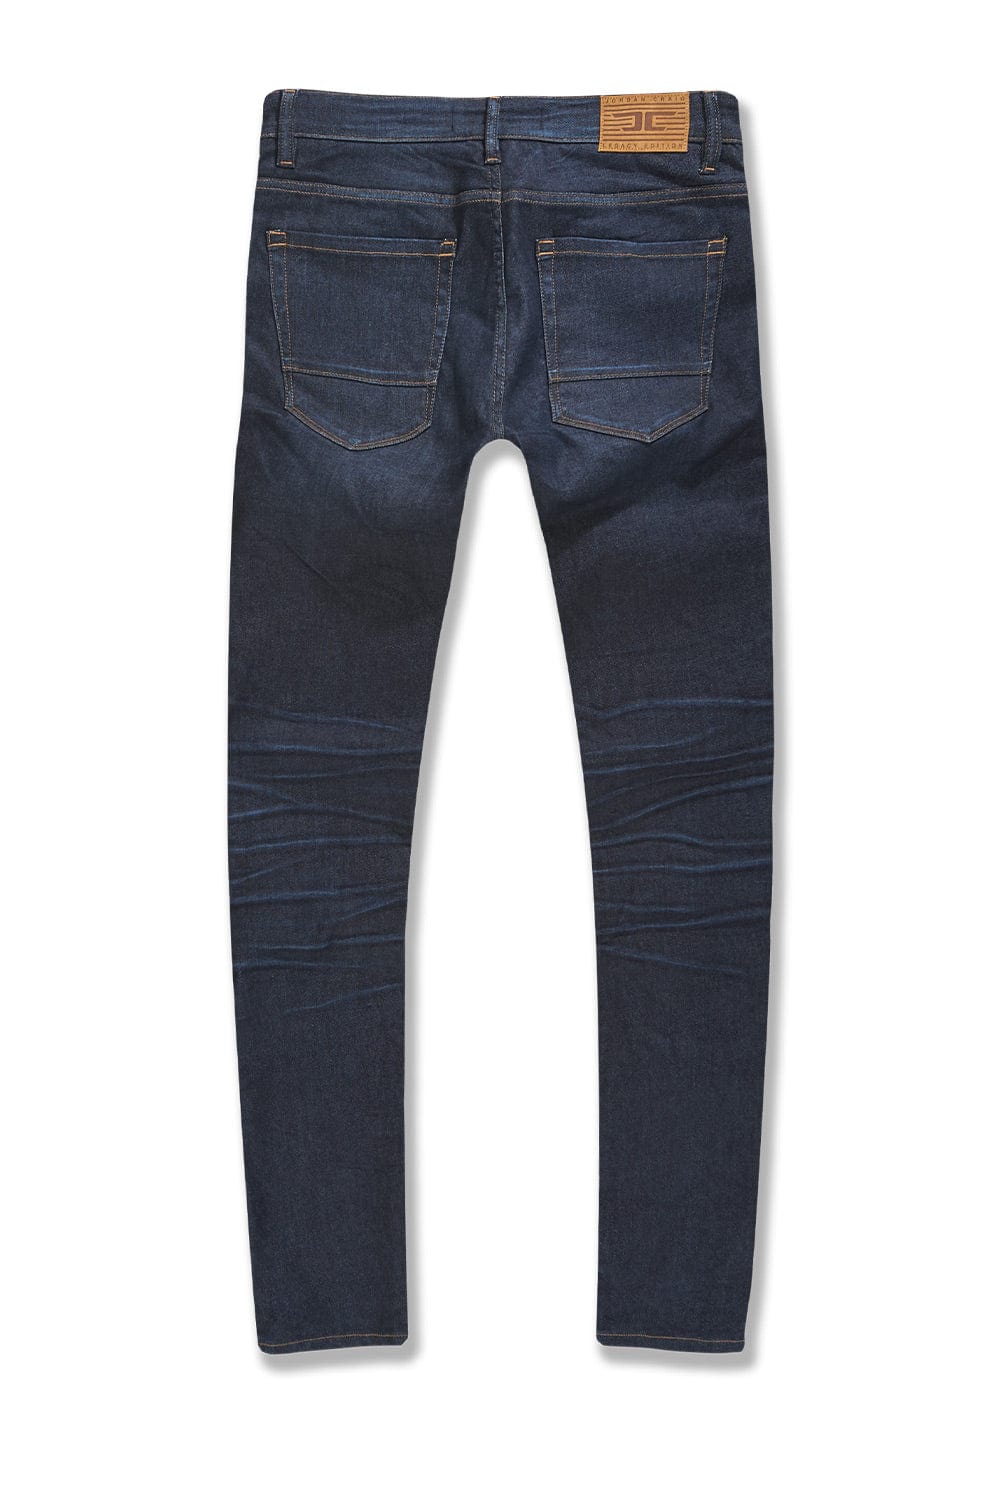 Jordan Craig Slim Fit Navy Blue Jeans